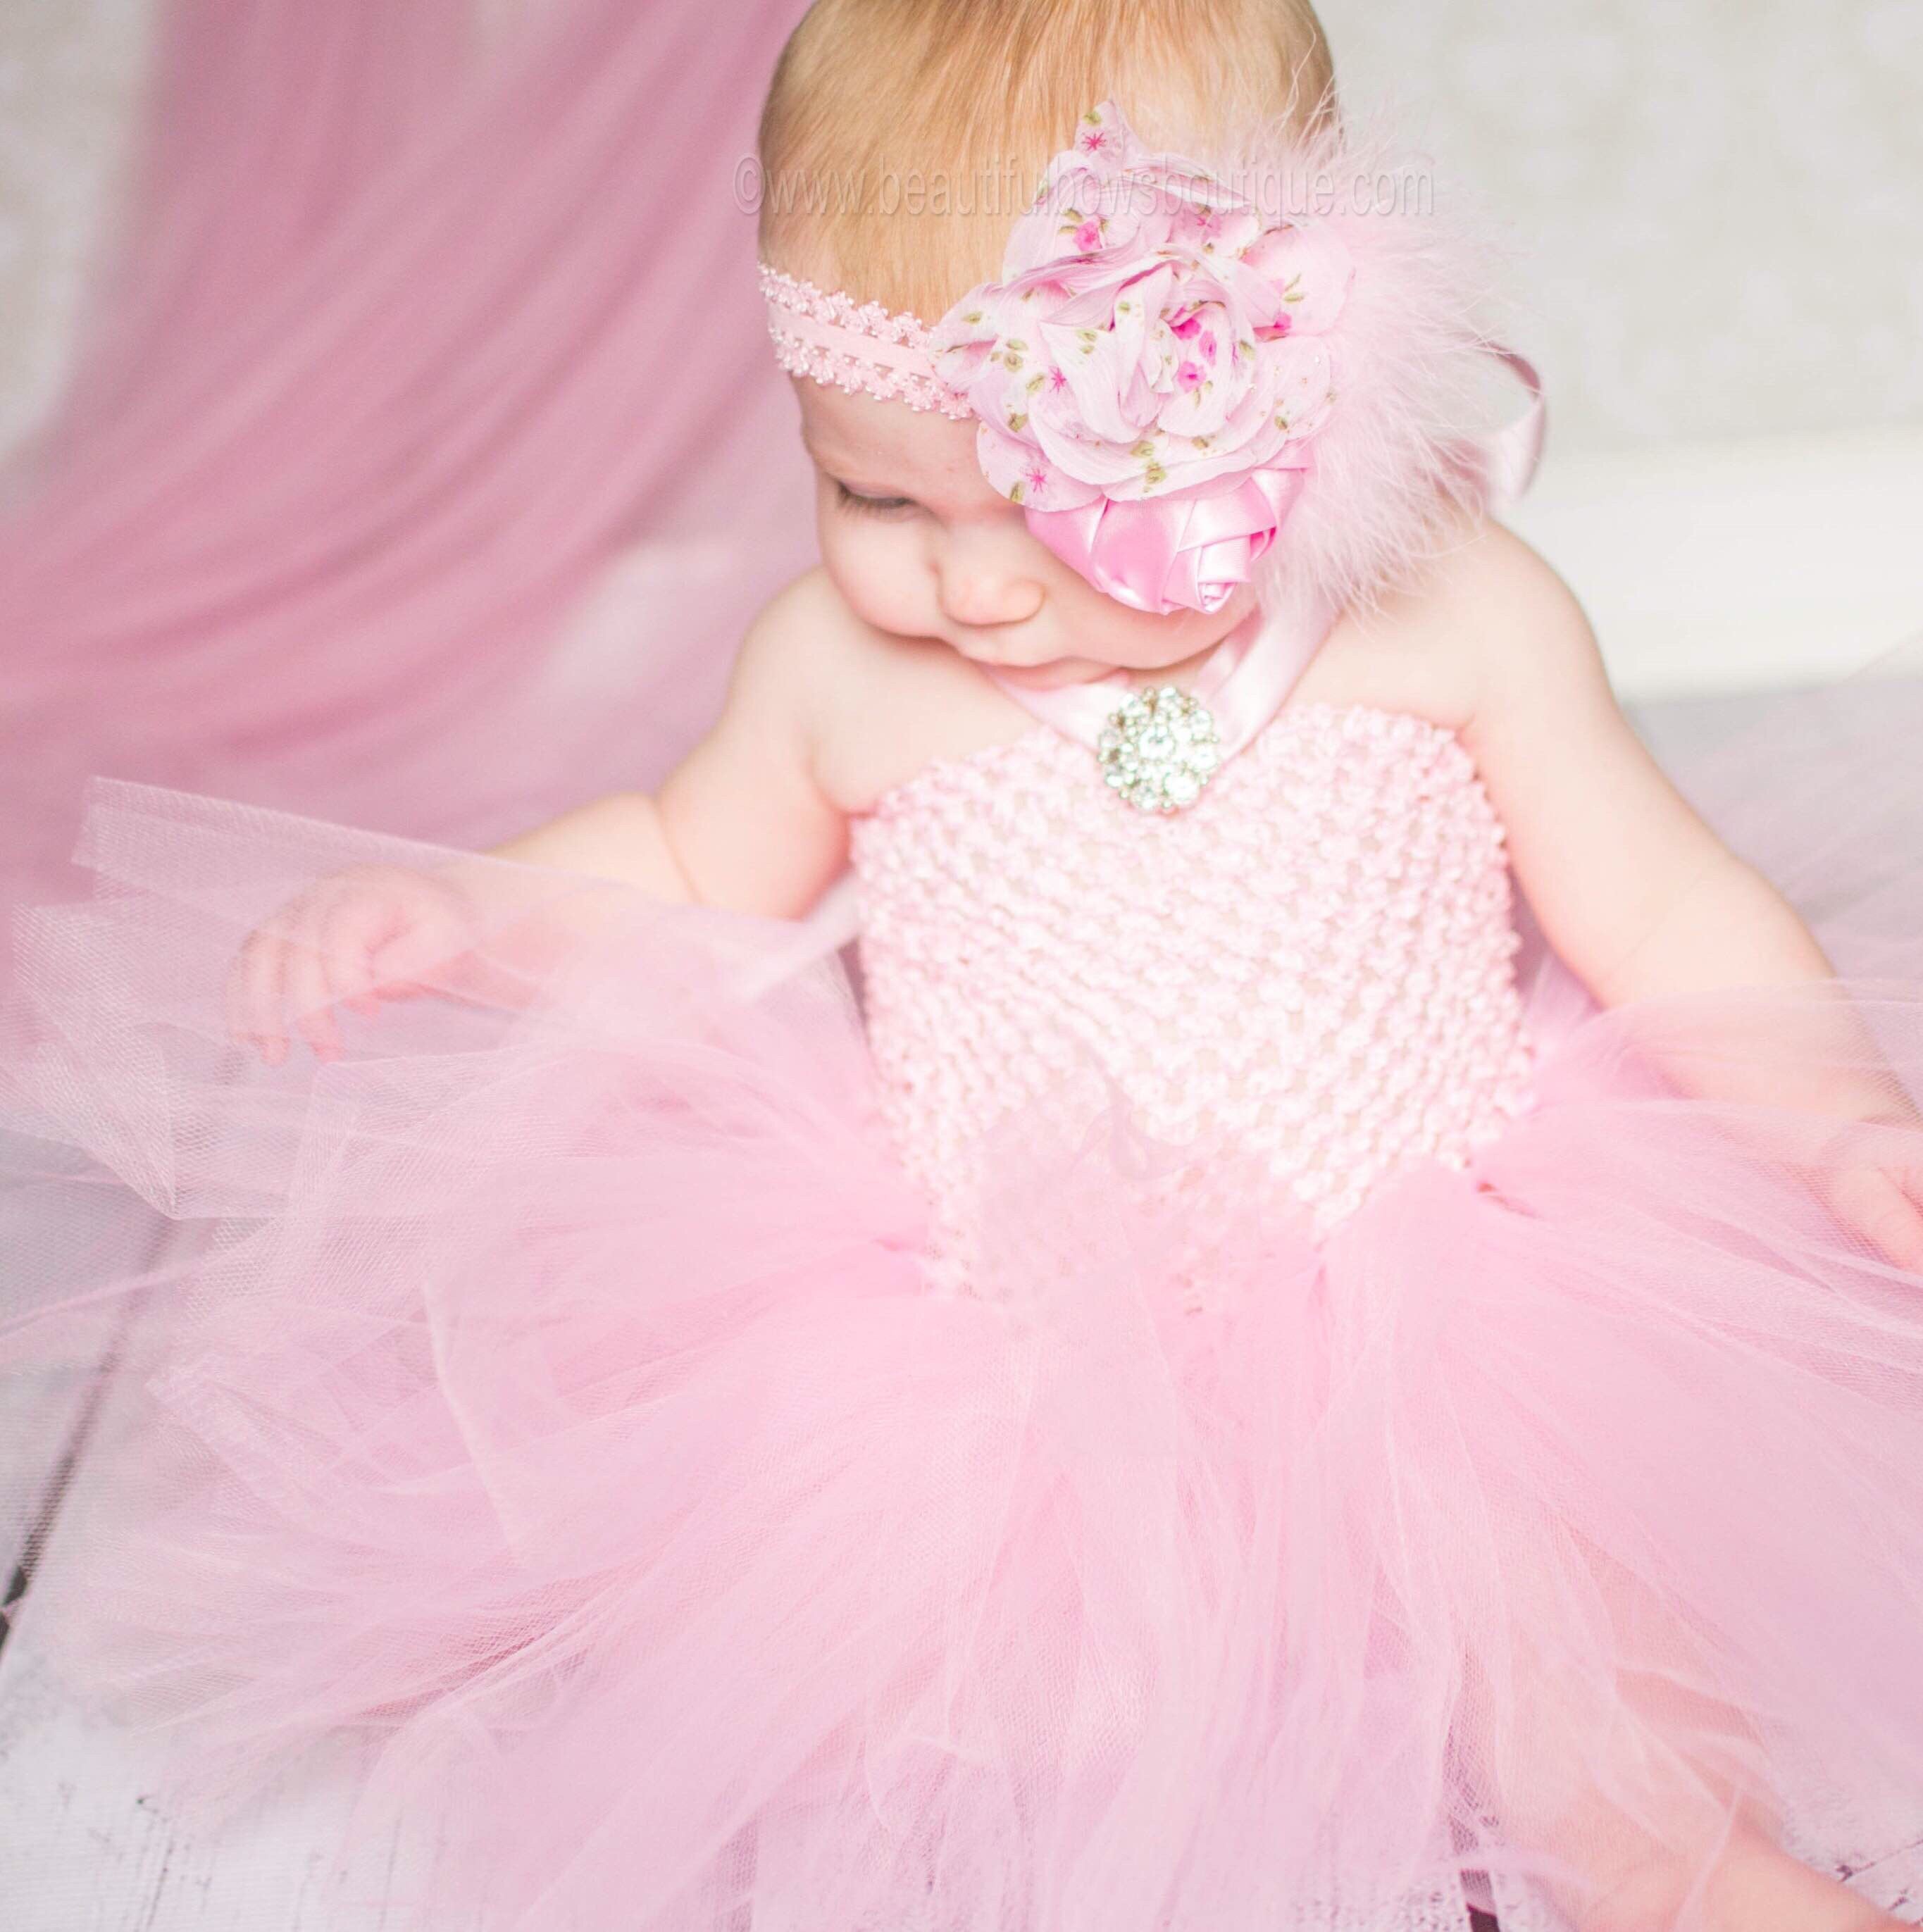 Buy Pink Baby Tutu Dress, Baby Girl Pink Tutu Dress, Pink Baby Tutu Outfit  Online at Beautiful Bows Boutique